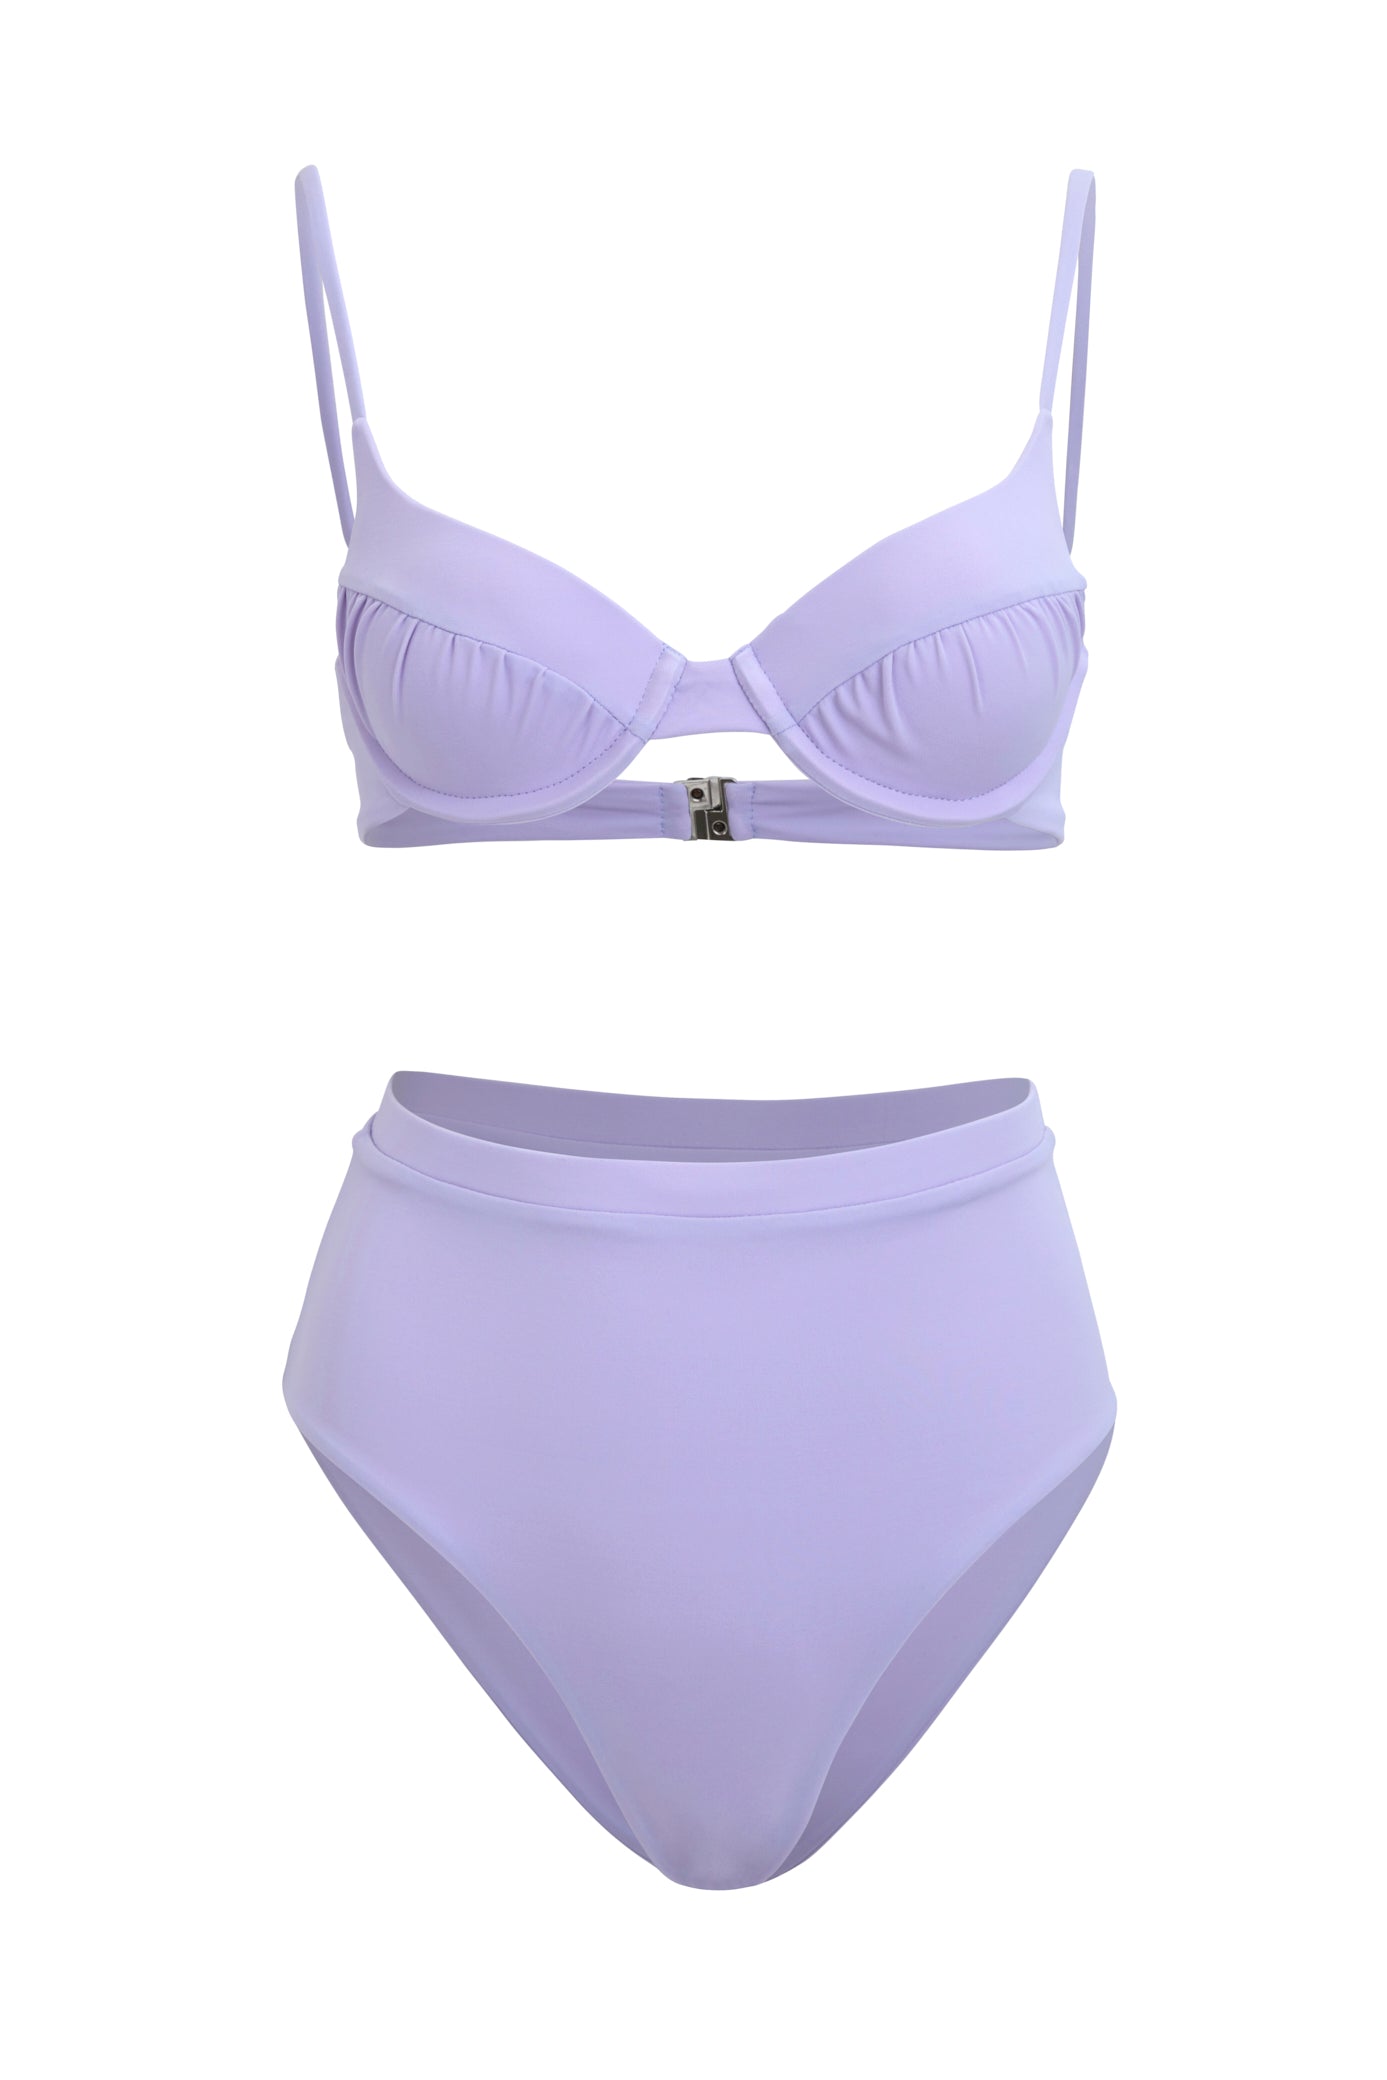 The Skylar Bikini Bottom in Lilac